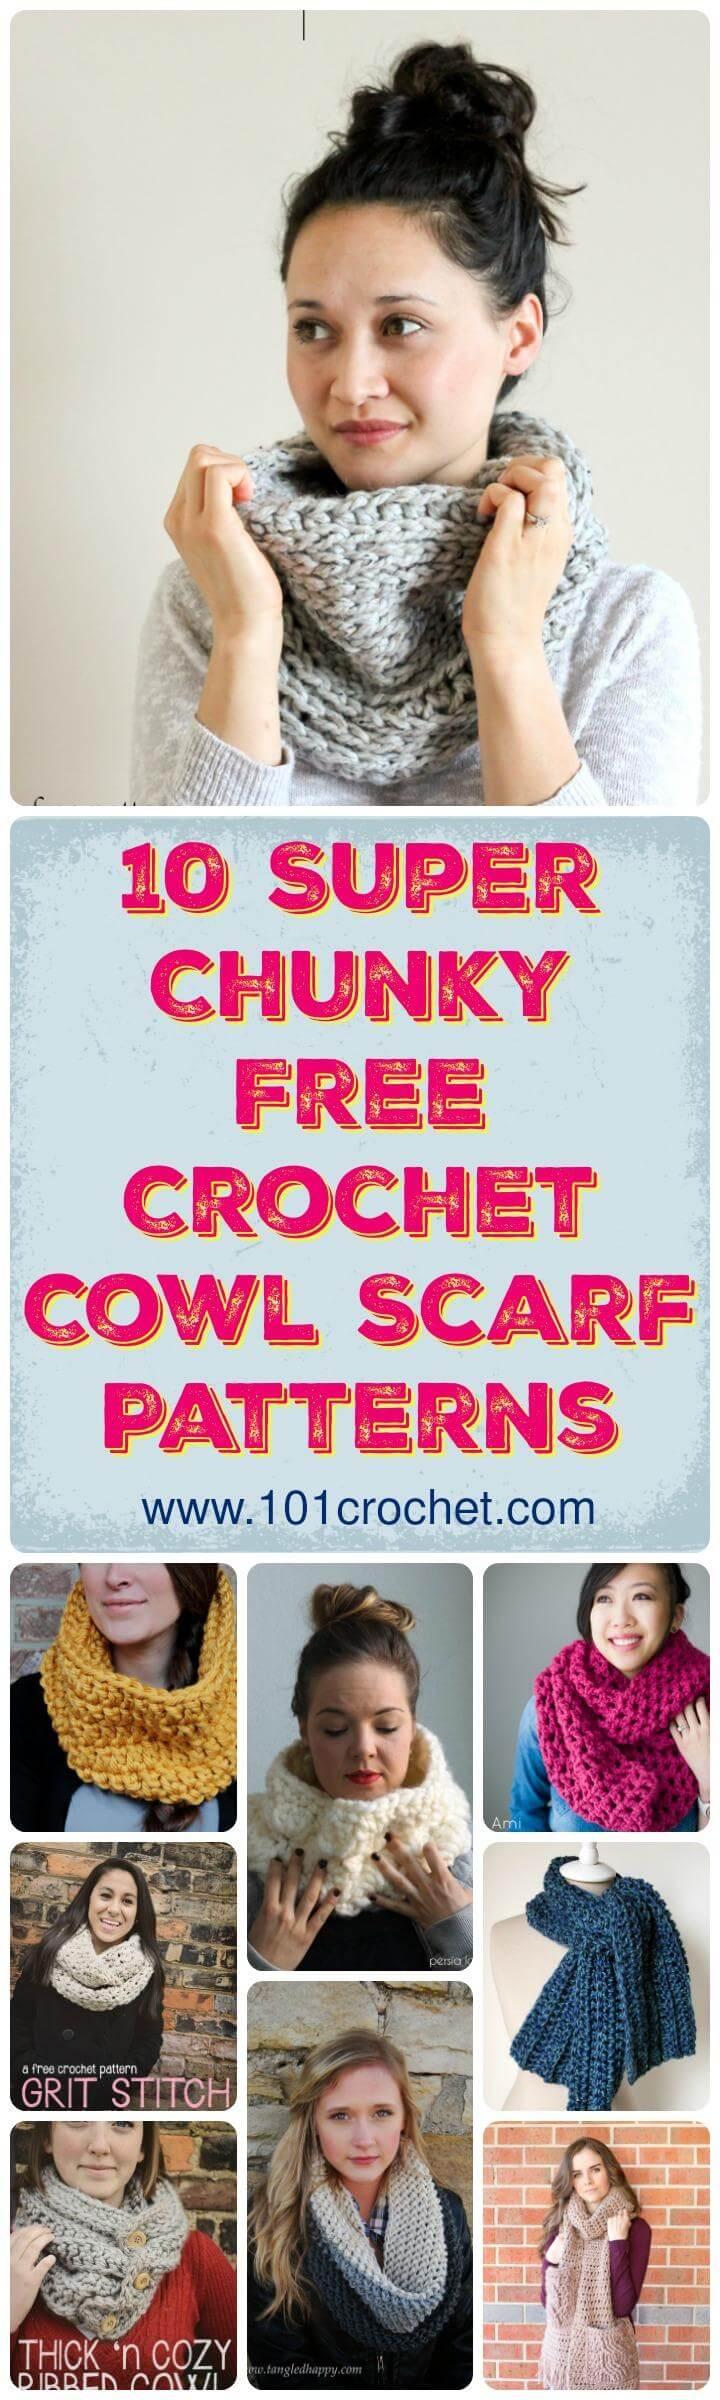 Free Crochet Cowl Scarf Patterns